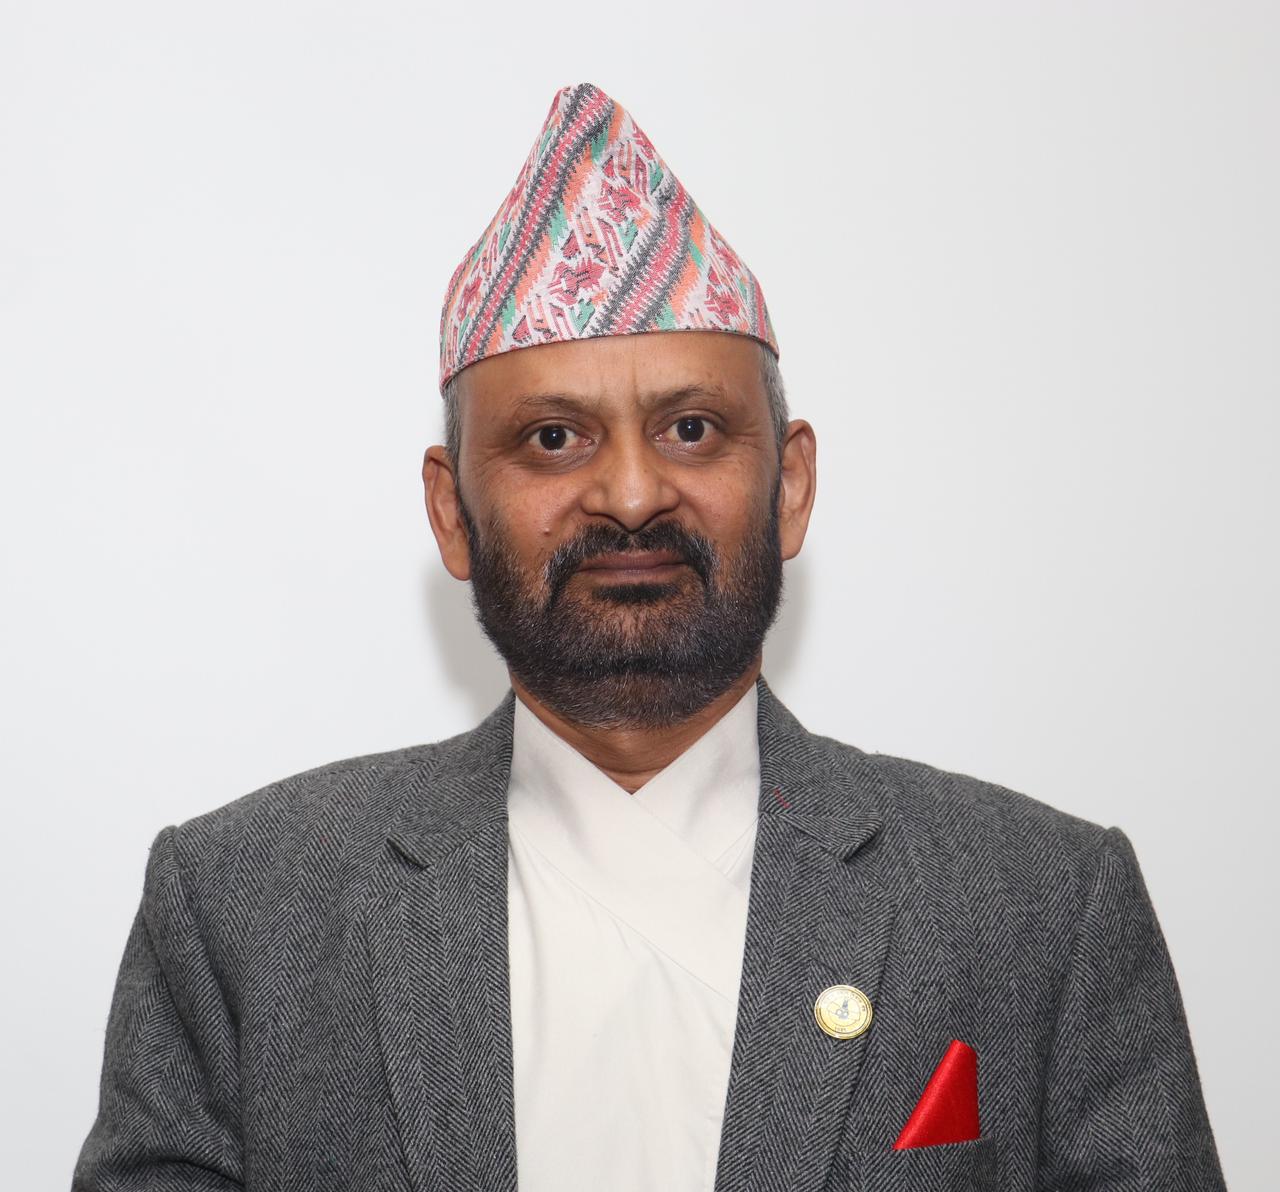 Mr. Birendra Nath Bhattarai